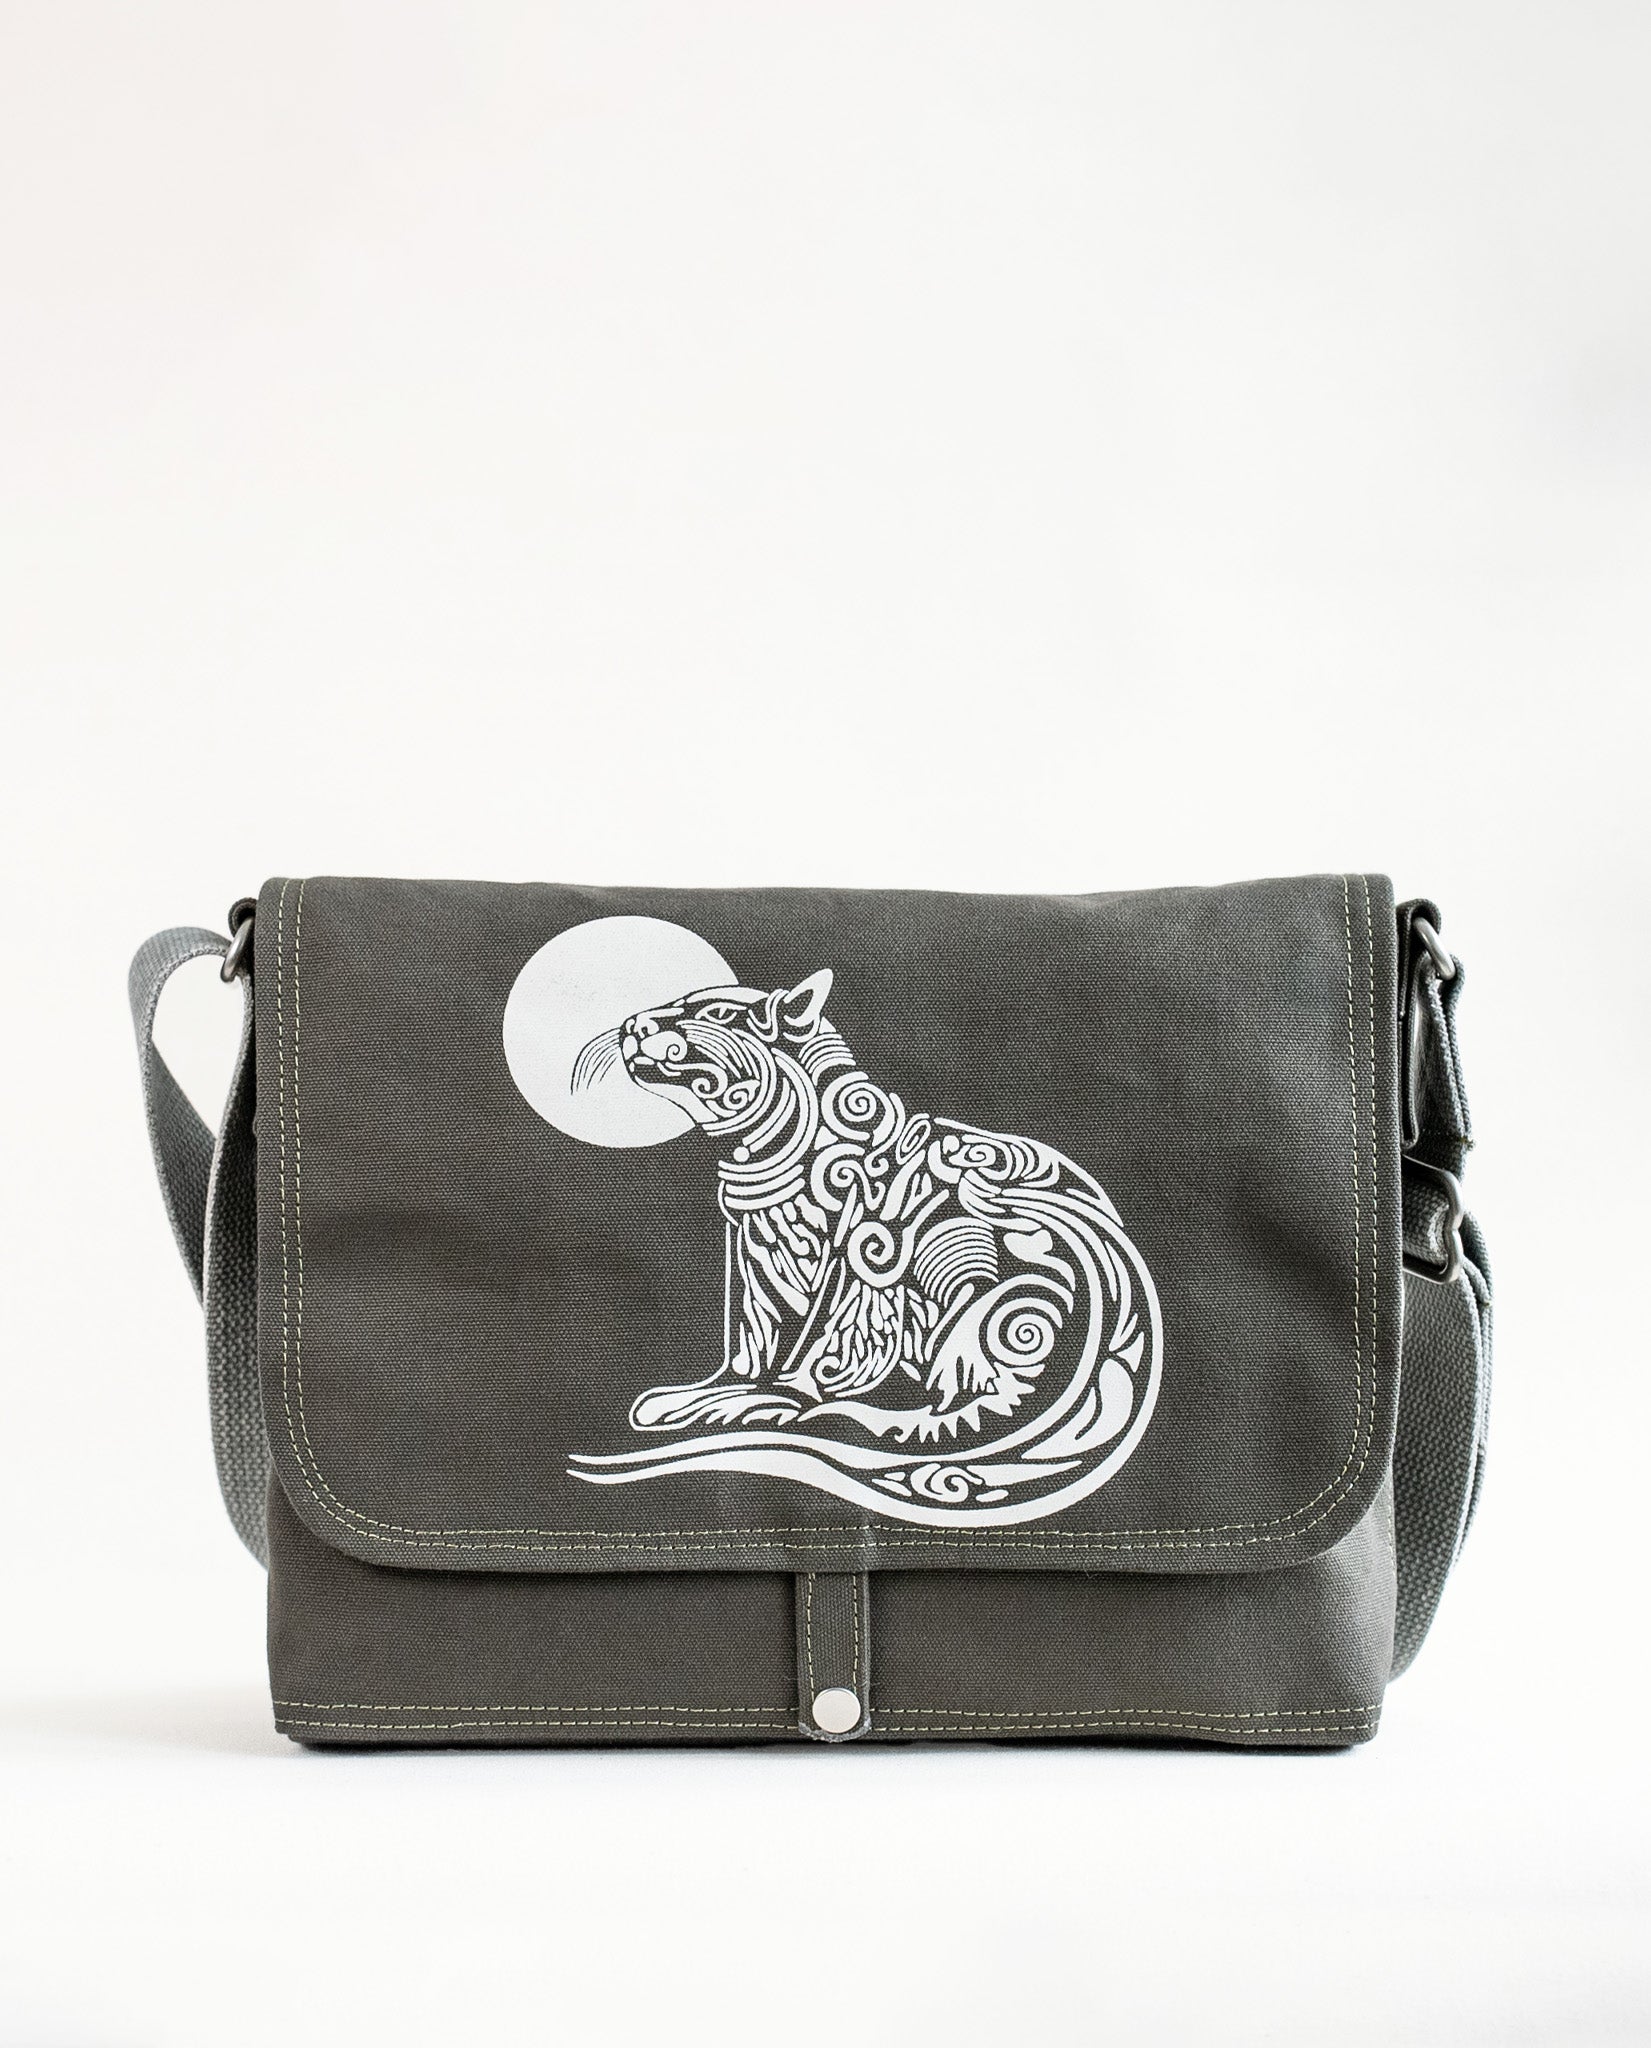 Front exterior of Dock 5’s Wild Cat Canvas Messenger Bag in olive featuring art from owner Natalija Walbridge